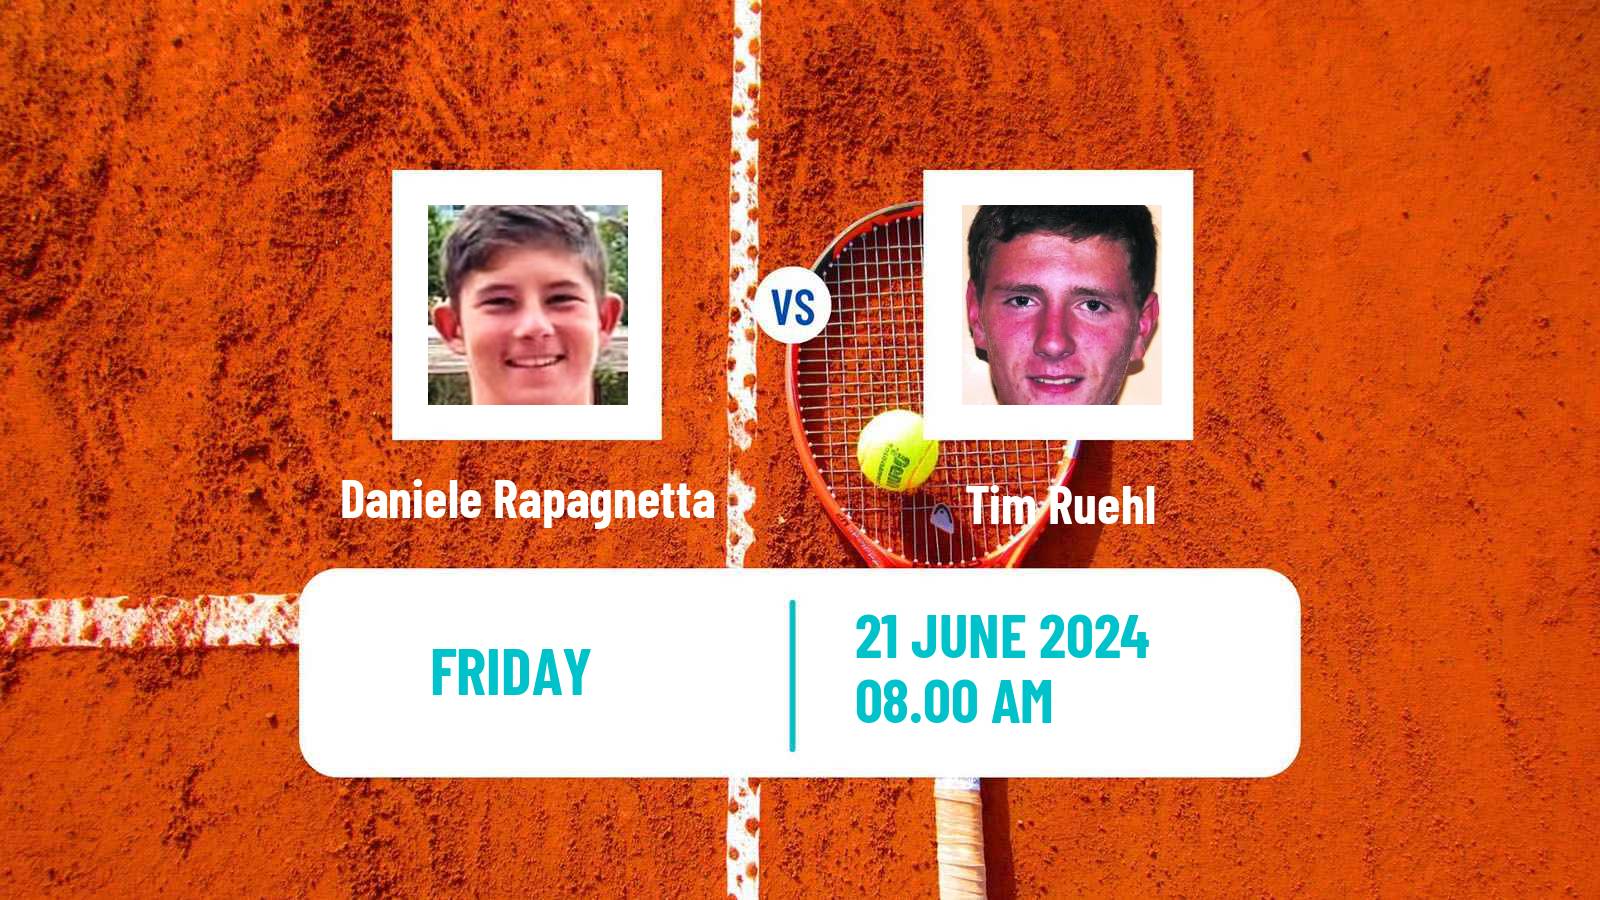 Tennis ITF M15 Koszalin 2 Men Daniele Rapagnetta - Tim Ruehl